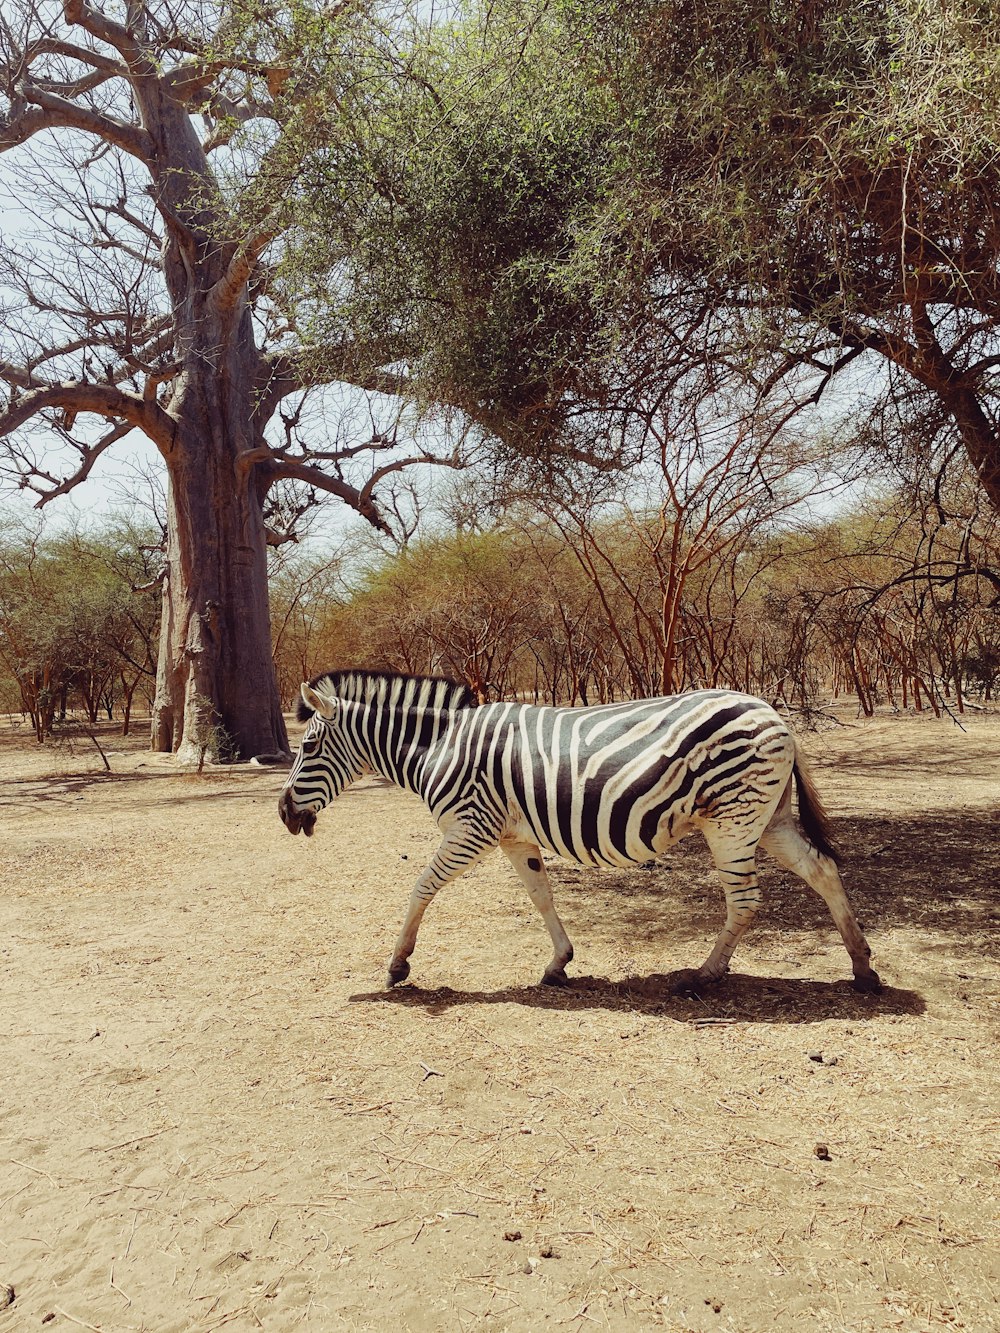 a zebra walking across a dirt field next to a tree